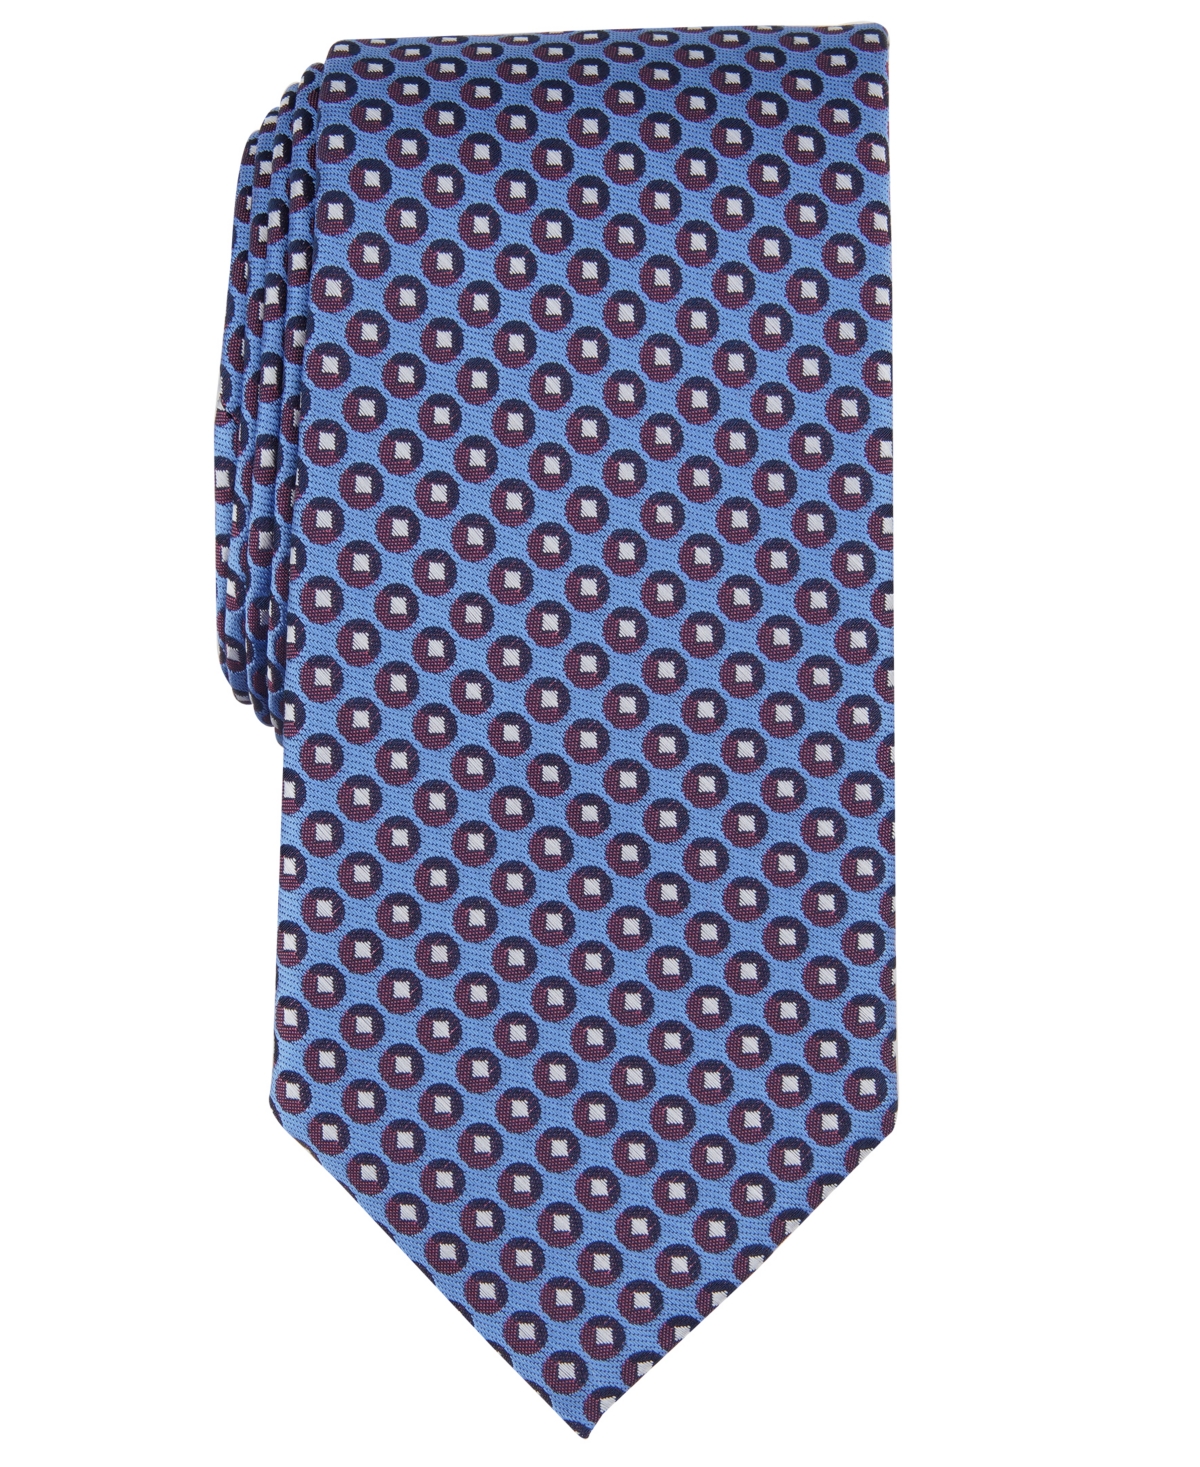 Men's Berman Dot Tie - Periwinkle